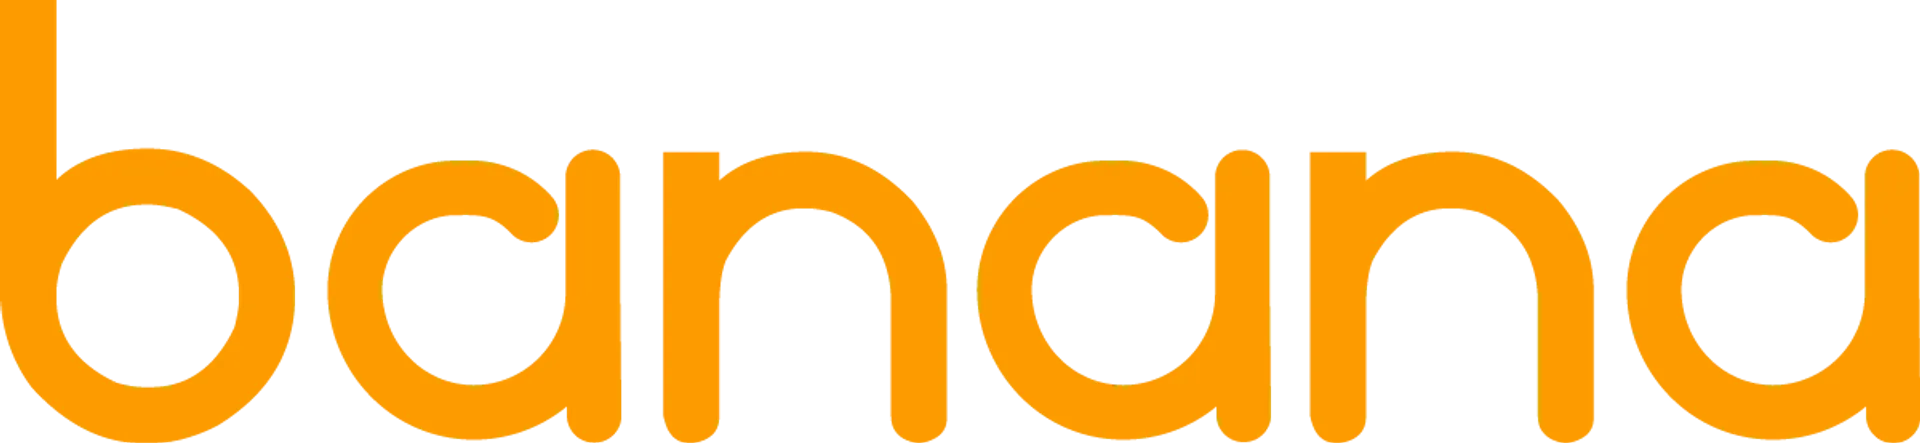 BANANA COMPUTER logo